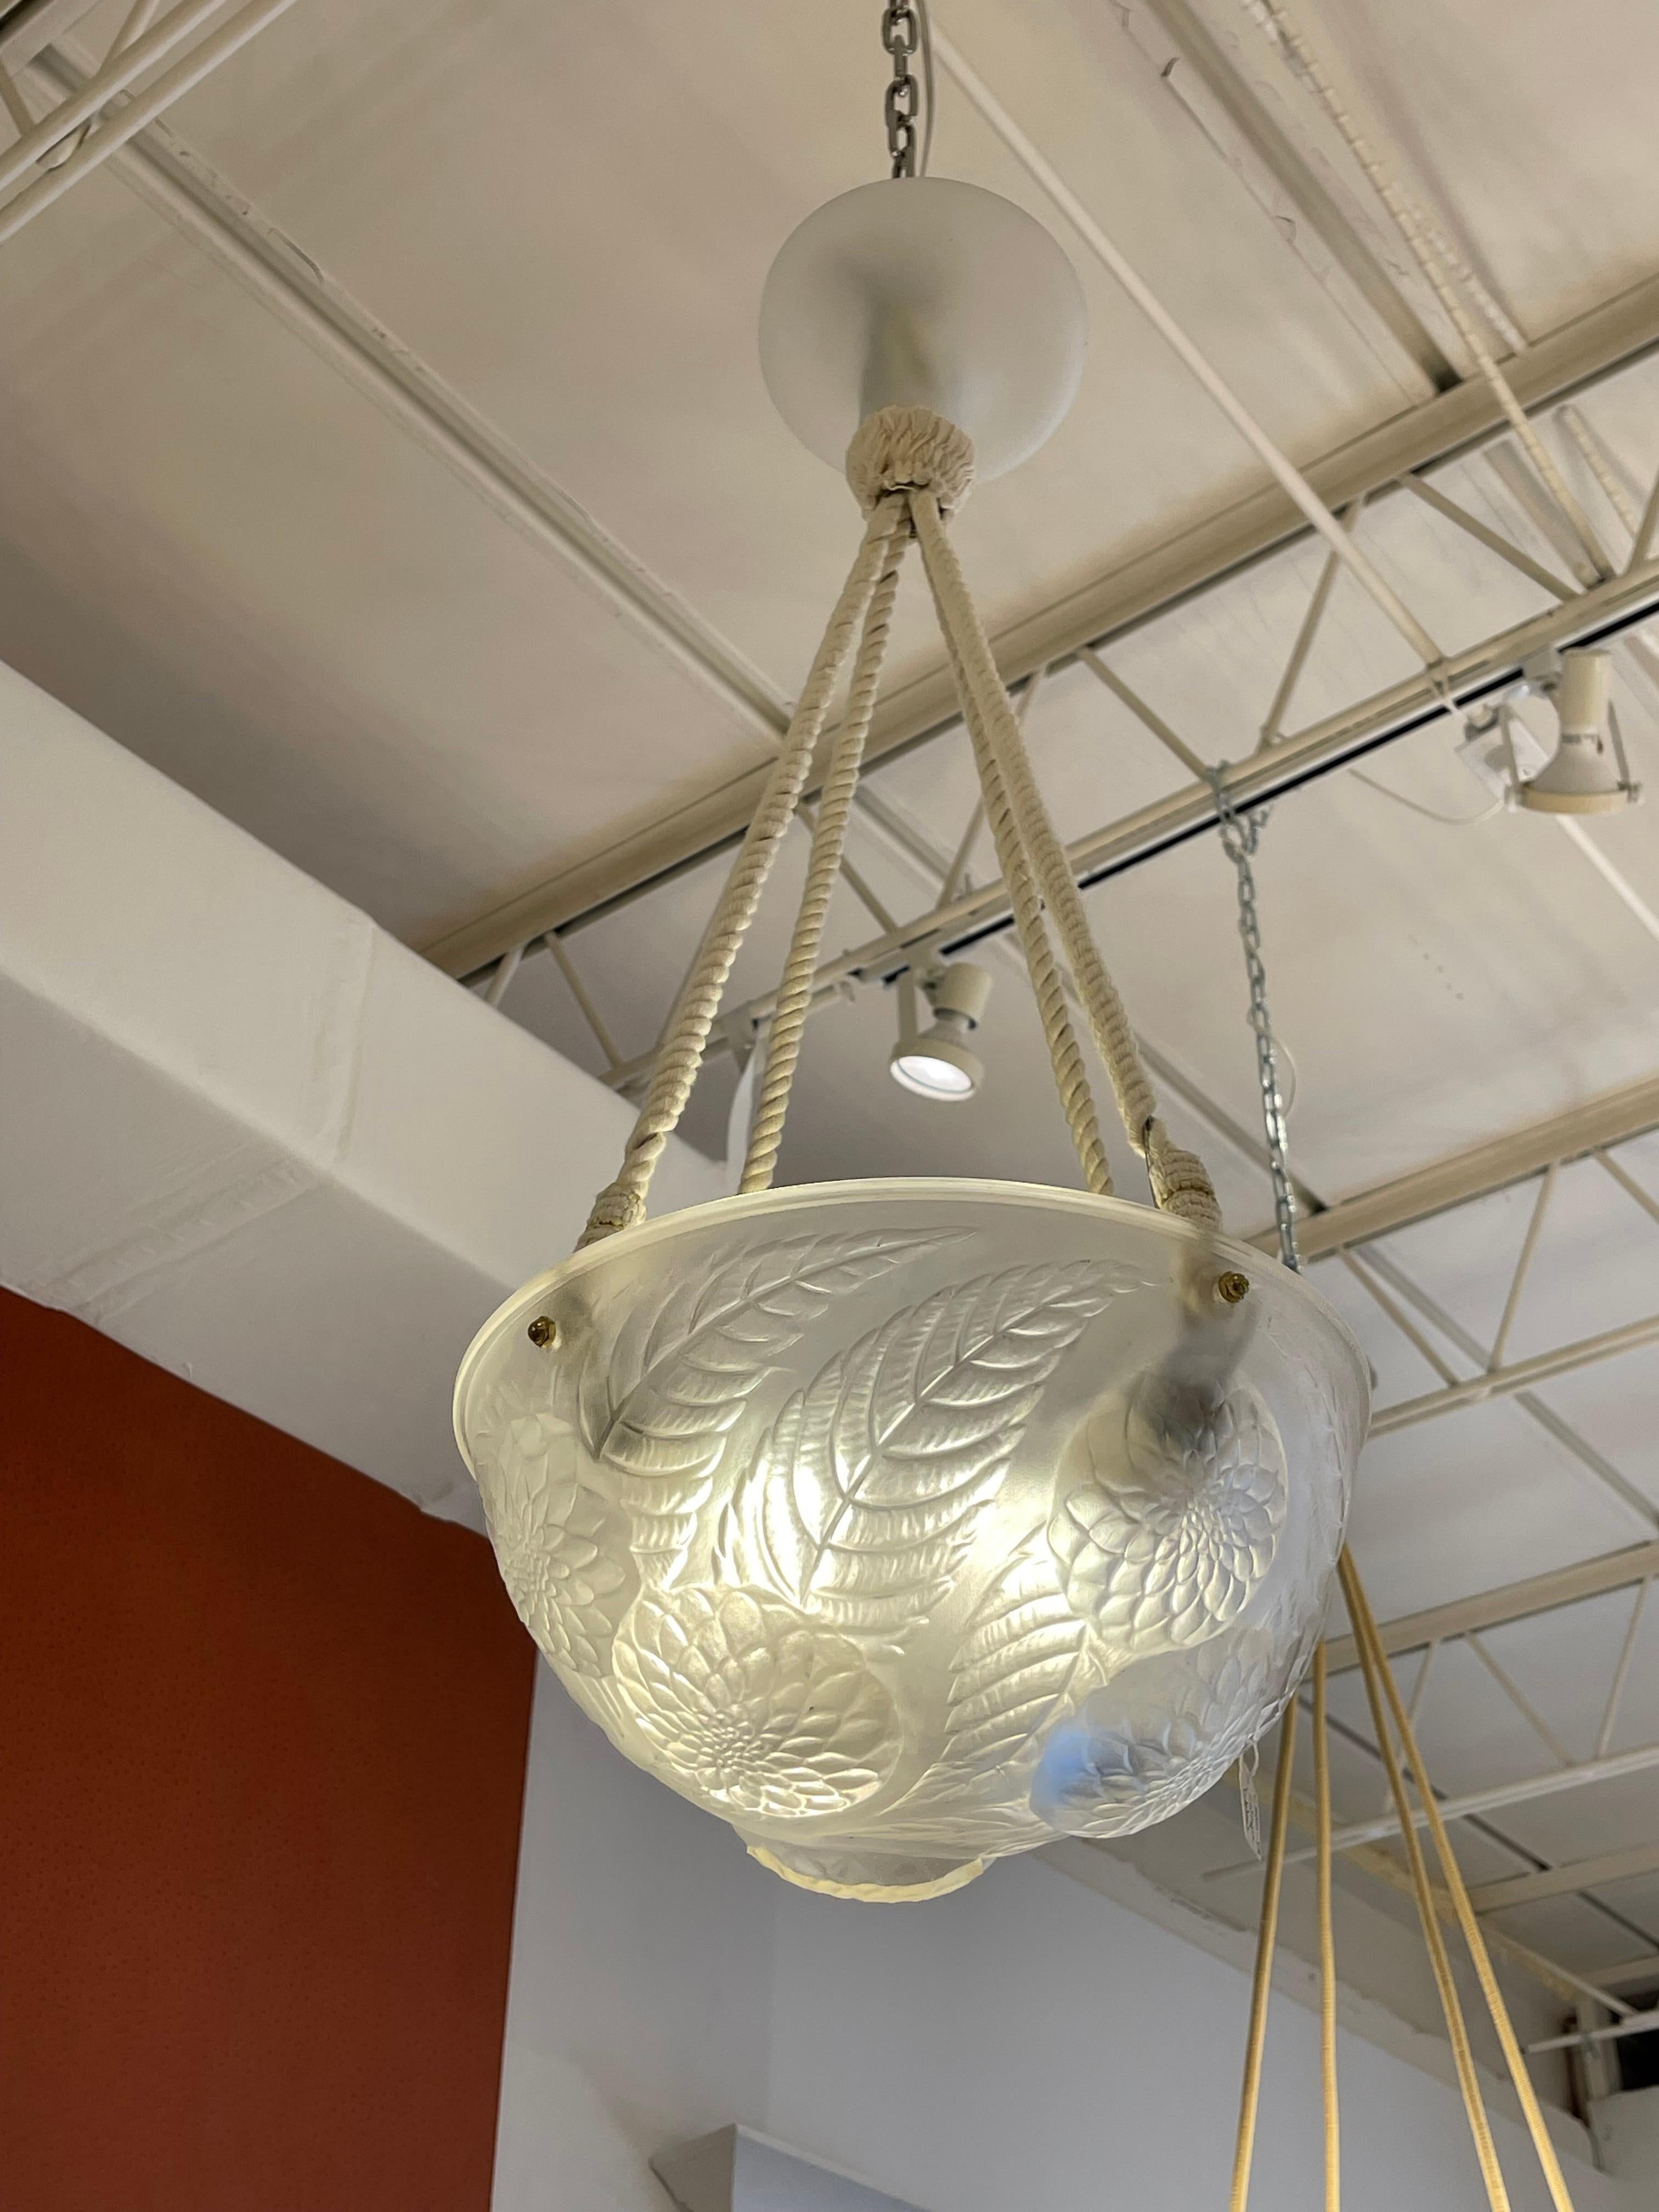 A unique chandelier by Rene Lalique named 